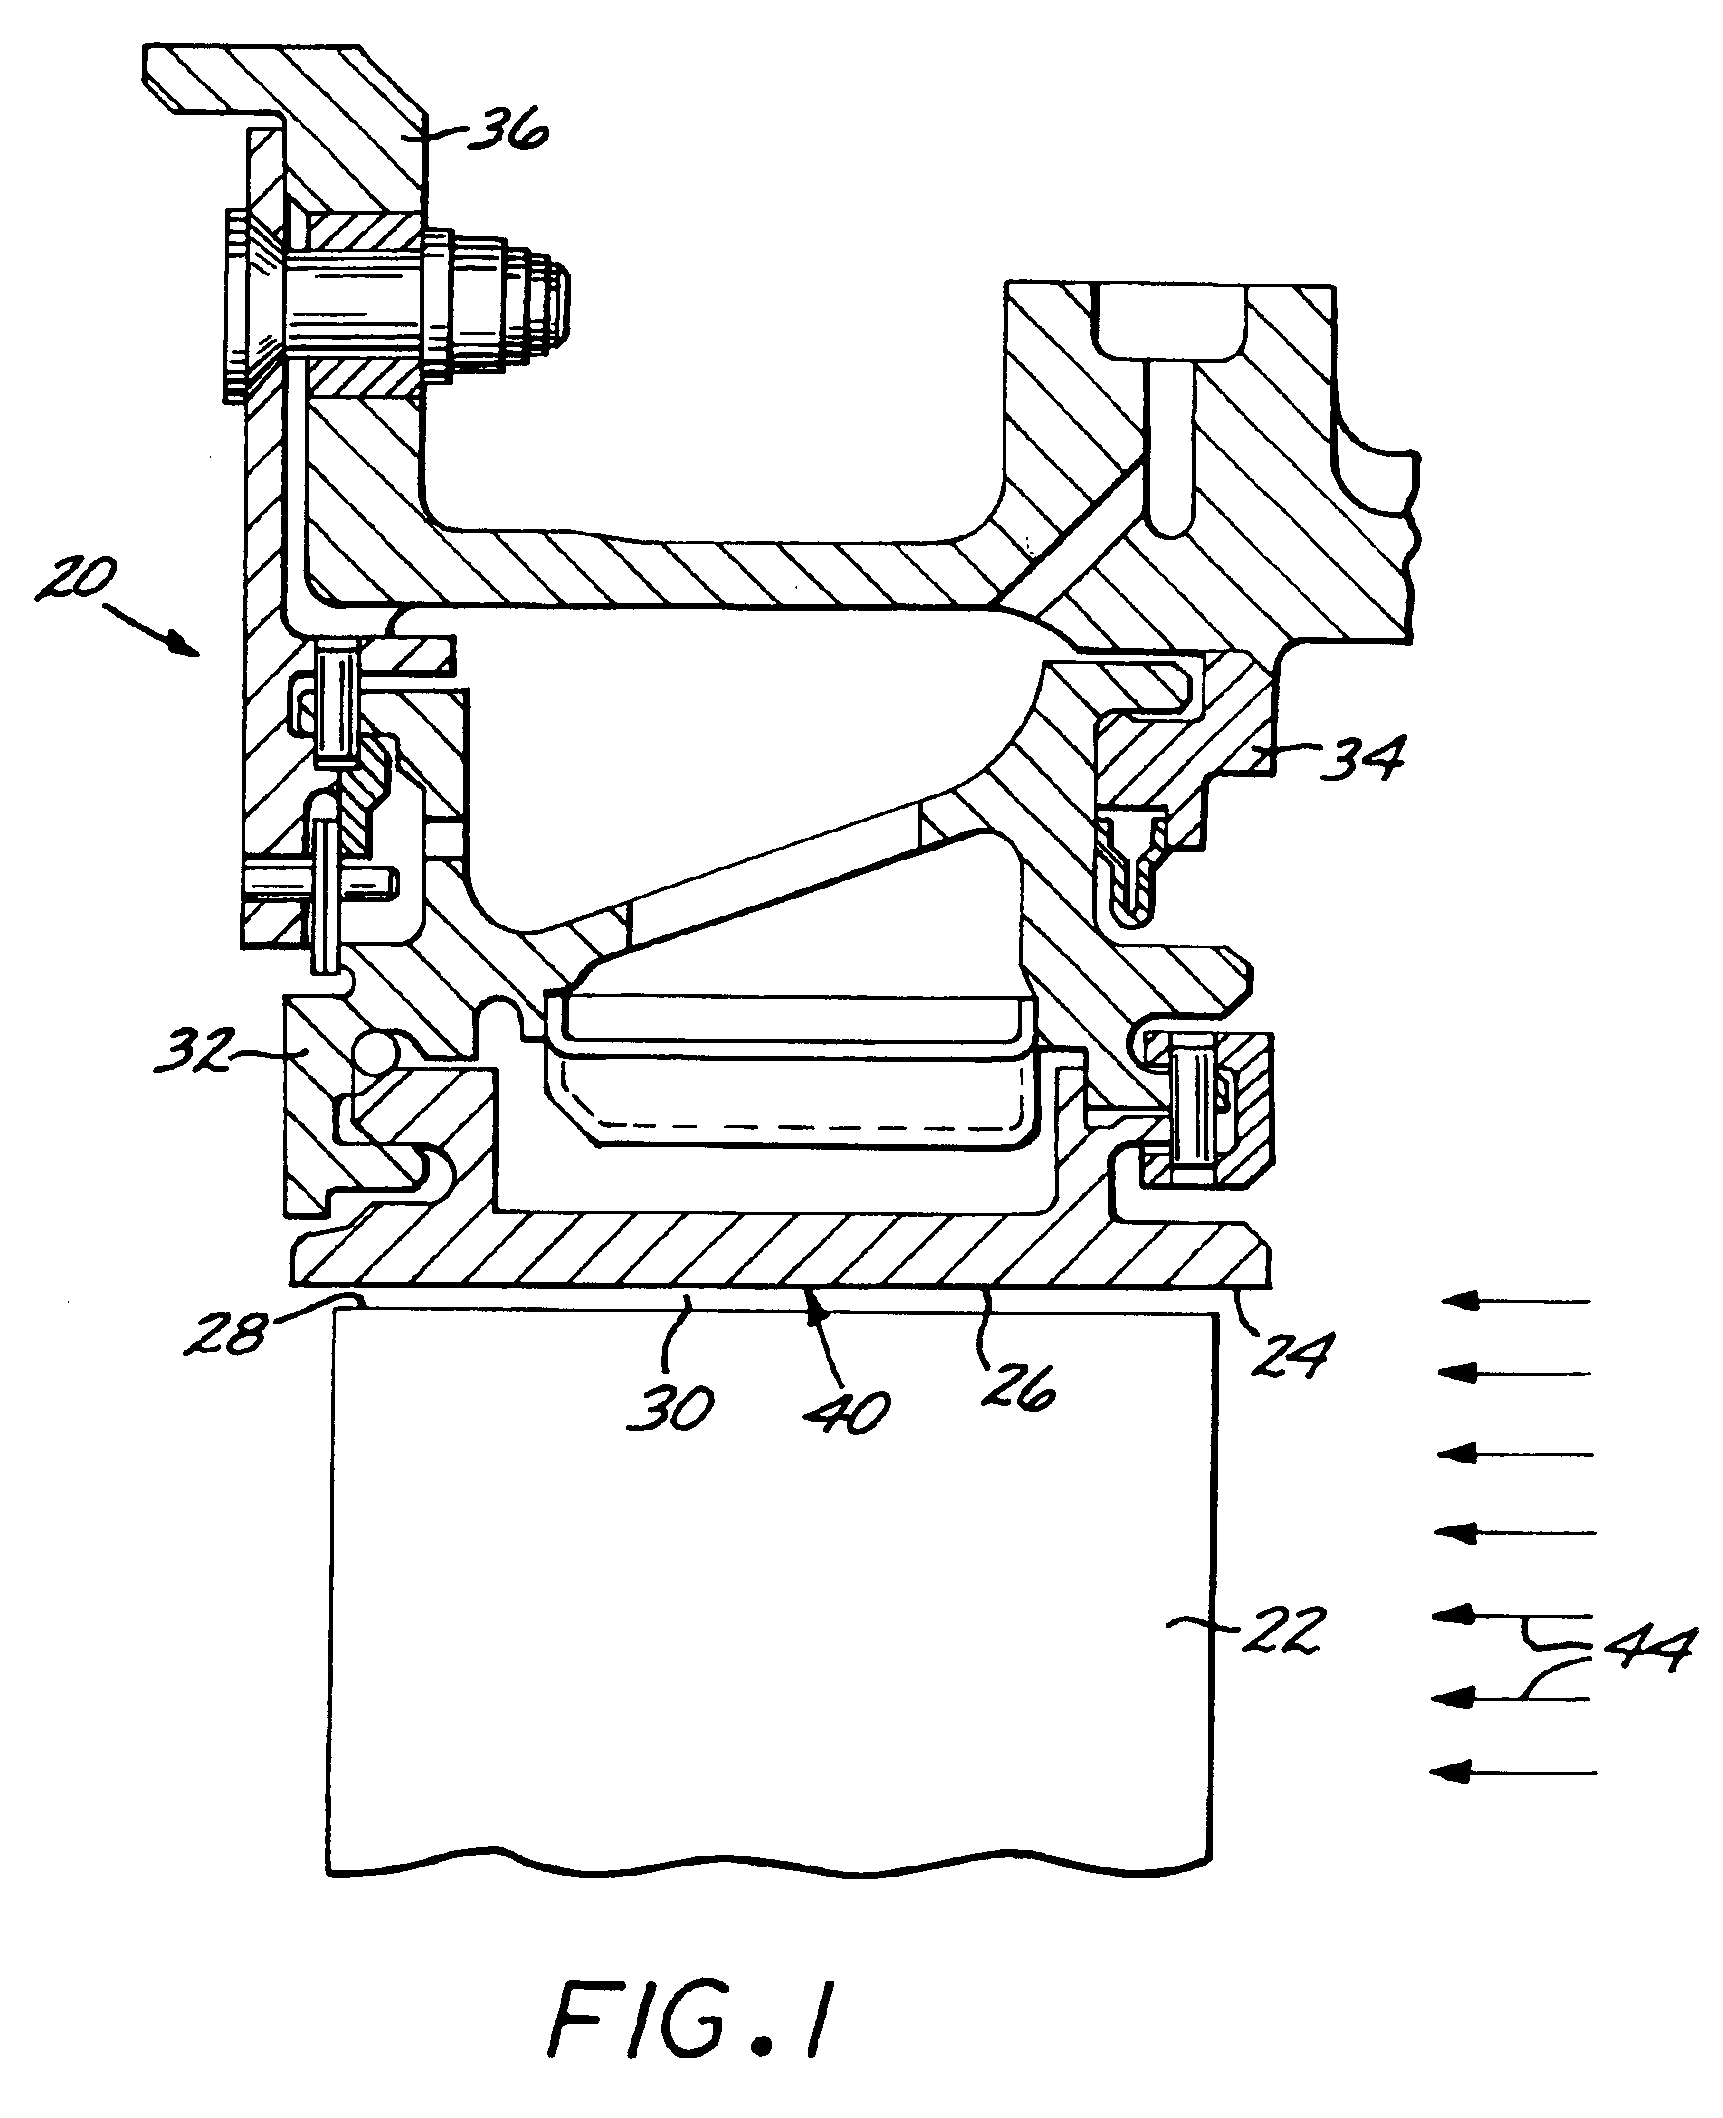 Method of repairing a stationary shroud of a gas turbine engine using plasma transferred arc welding